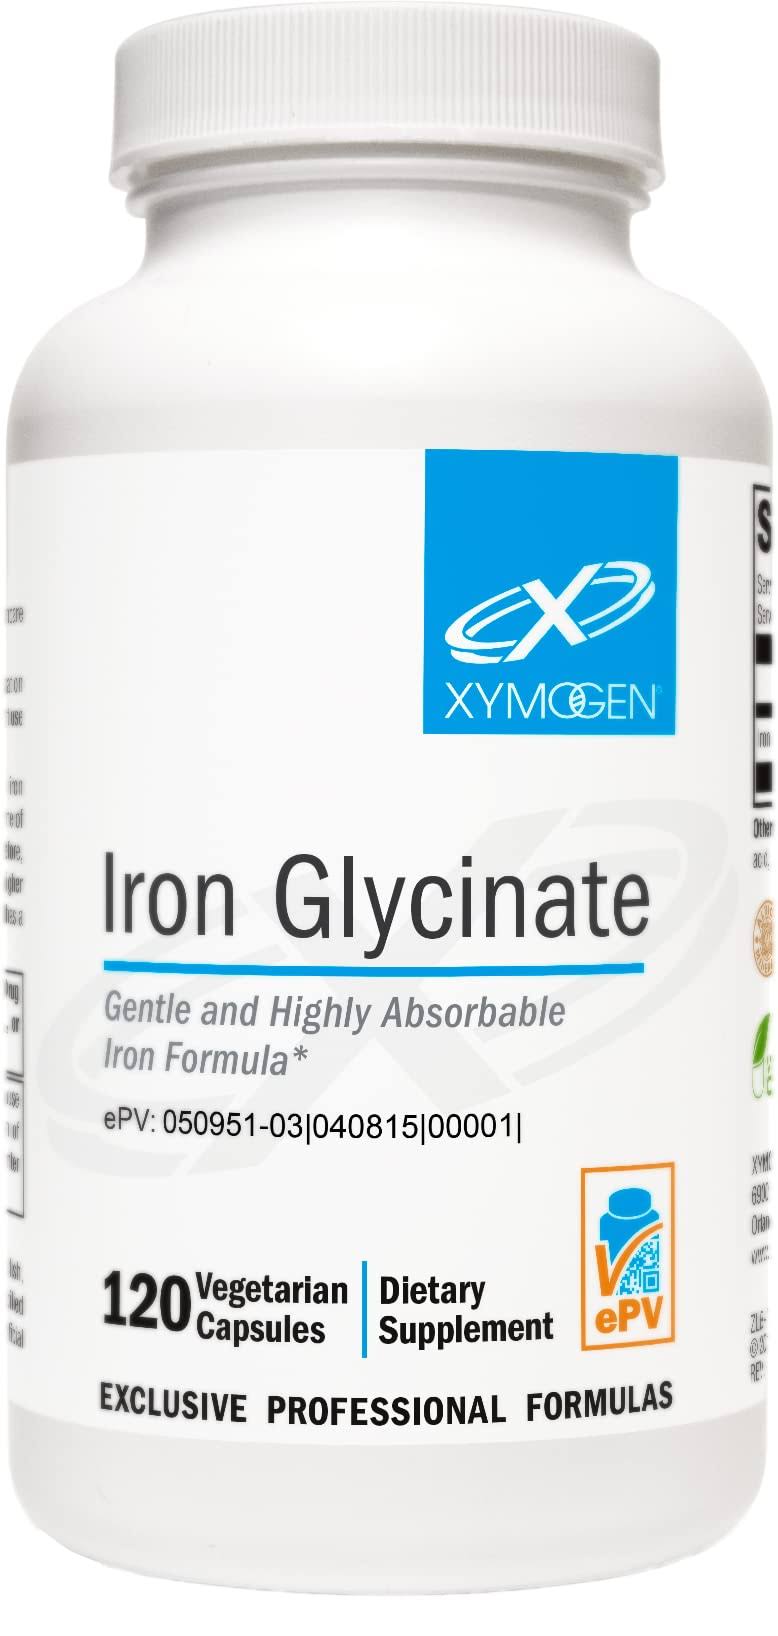 Xymogen Iron Glycinate Supplement - 120 Capsules